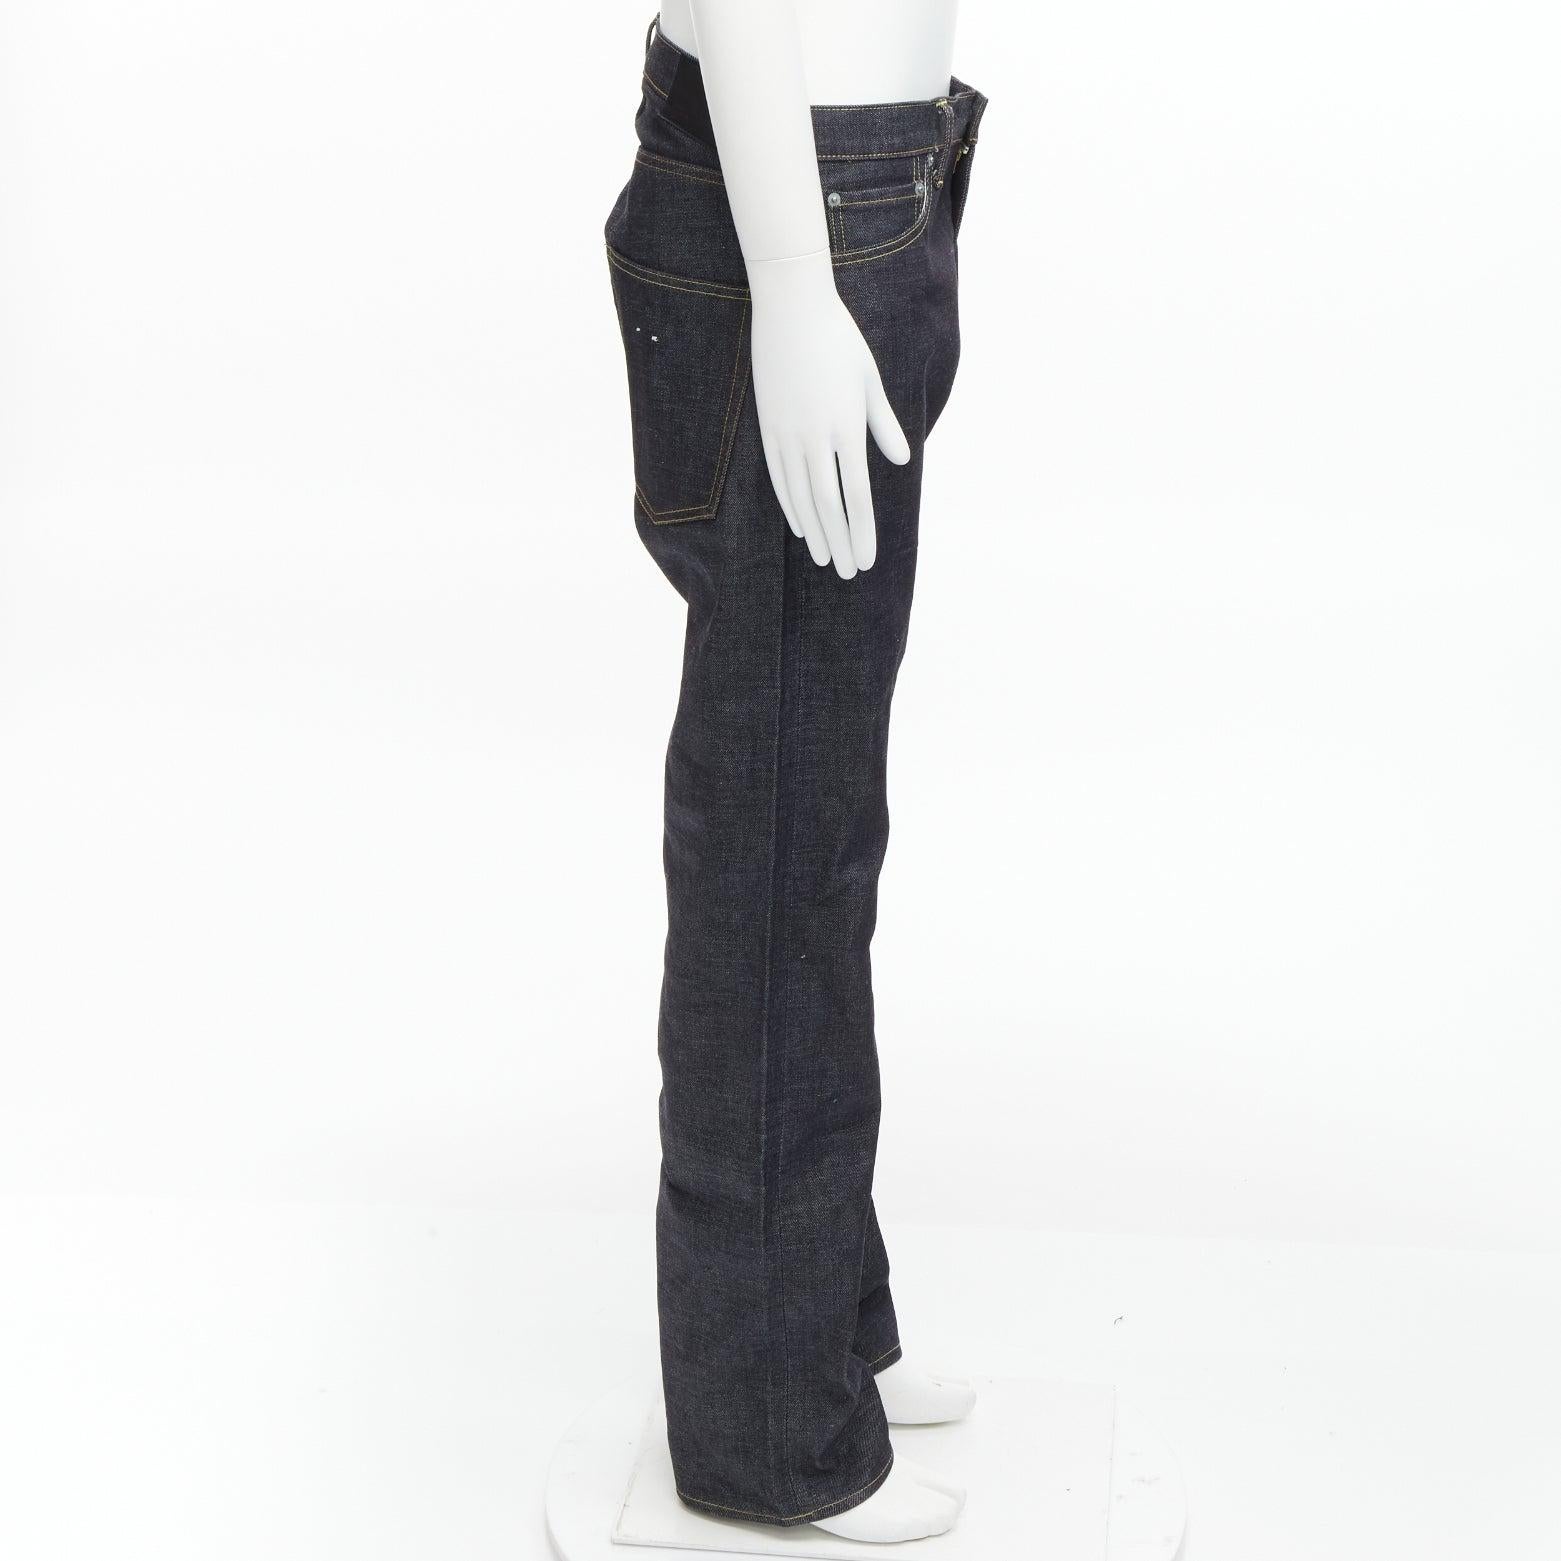 VISVIM 05R dark navy 3D back yoke white stitches pocket selvedge denim pants 34